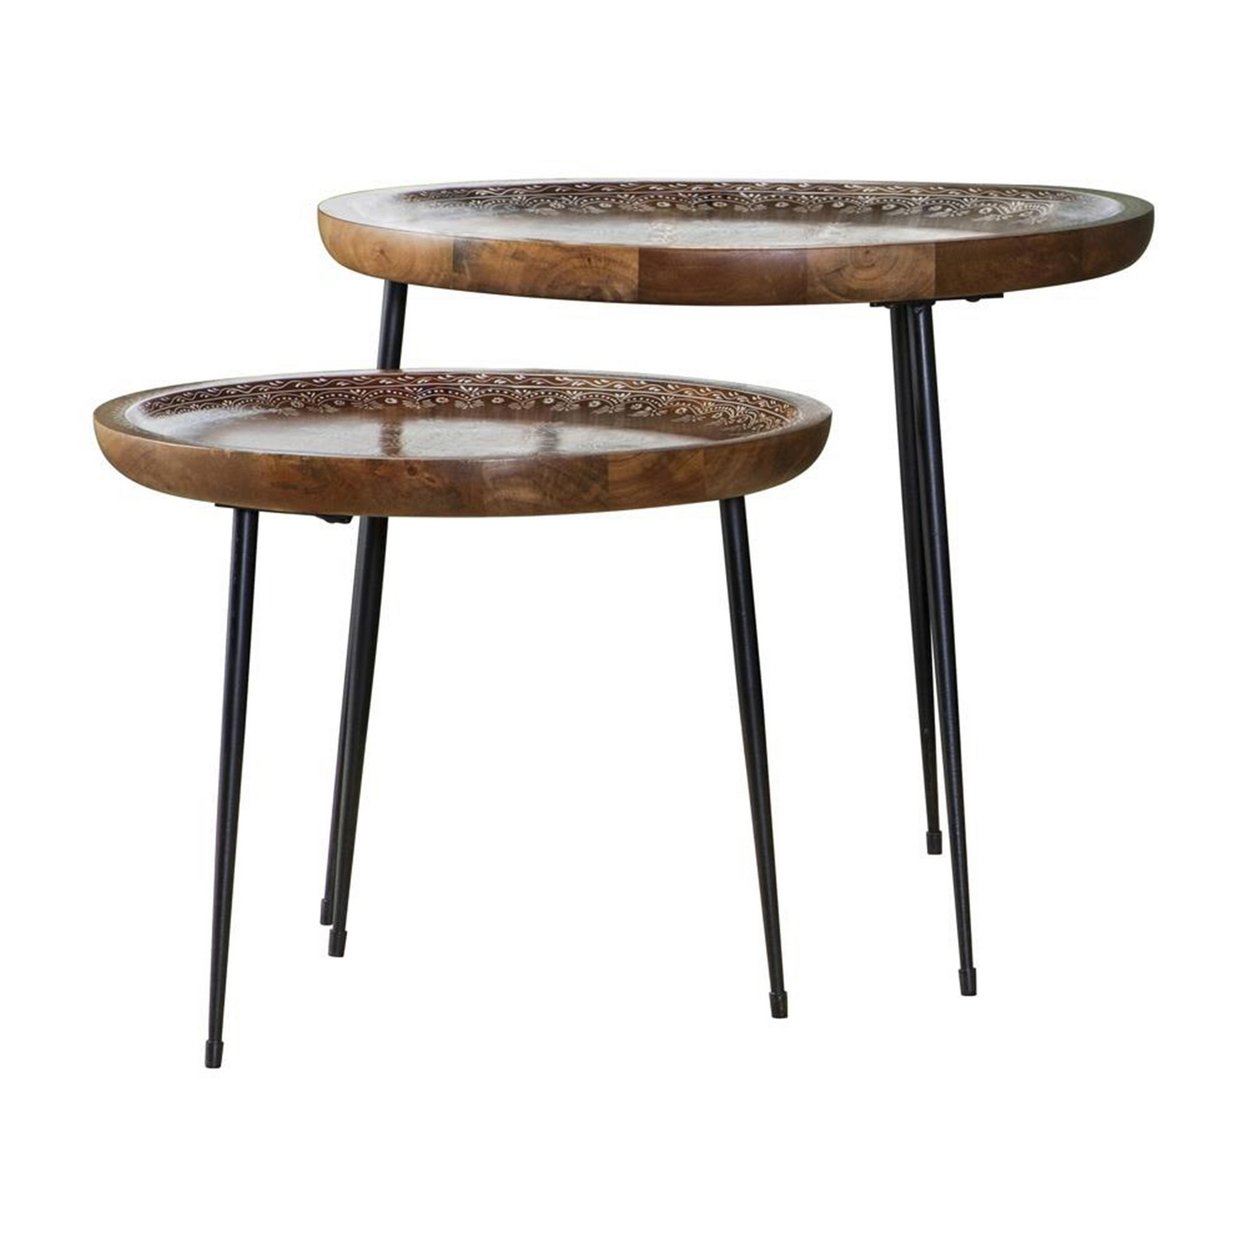 2 Piece Round Nesting Tray Top Table Set, Carved Edges, Motif Design, Brown- Saltoro Sherpi